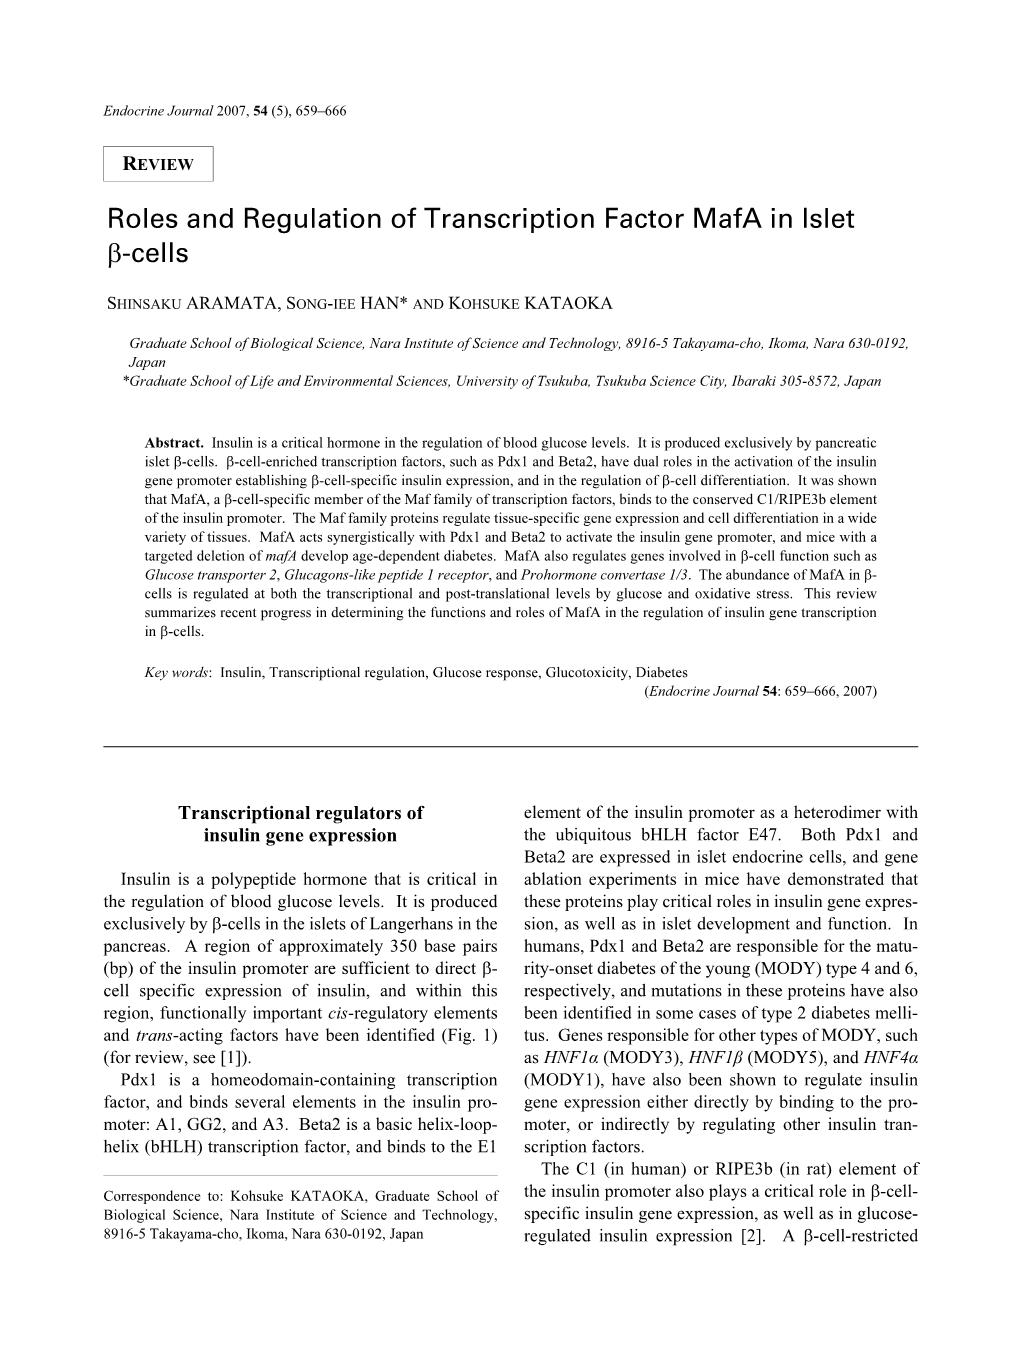 Roles and Regulation of Transcription Factor Mafa in Islet Β-Cells